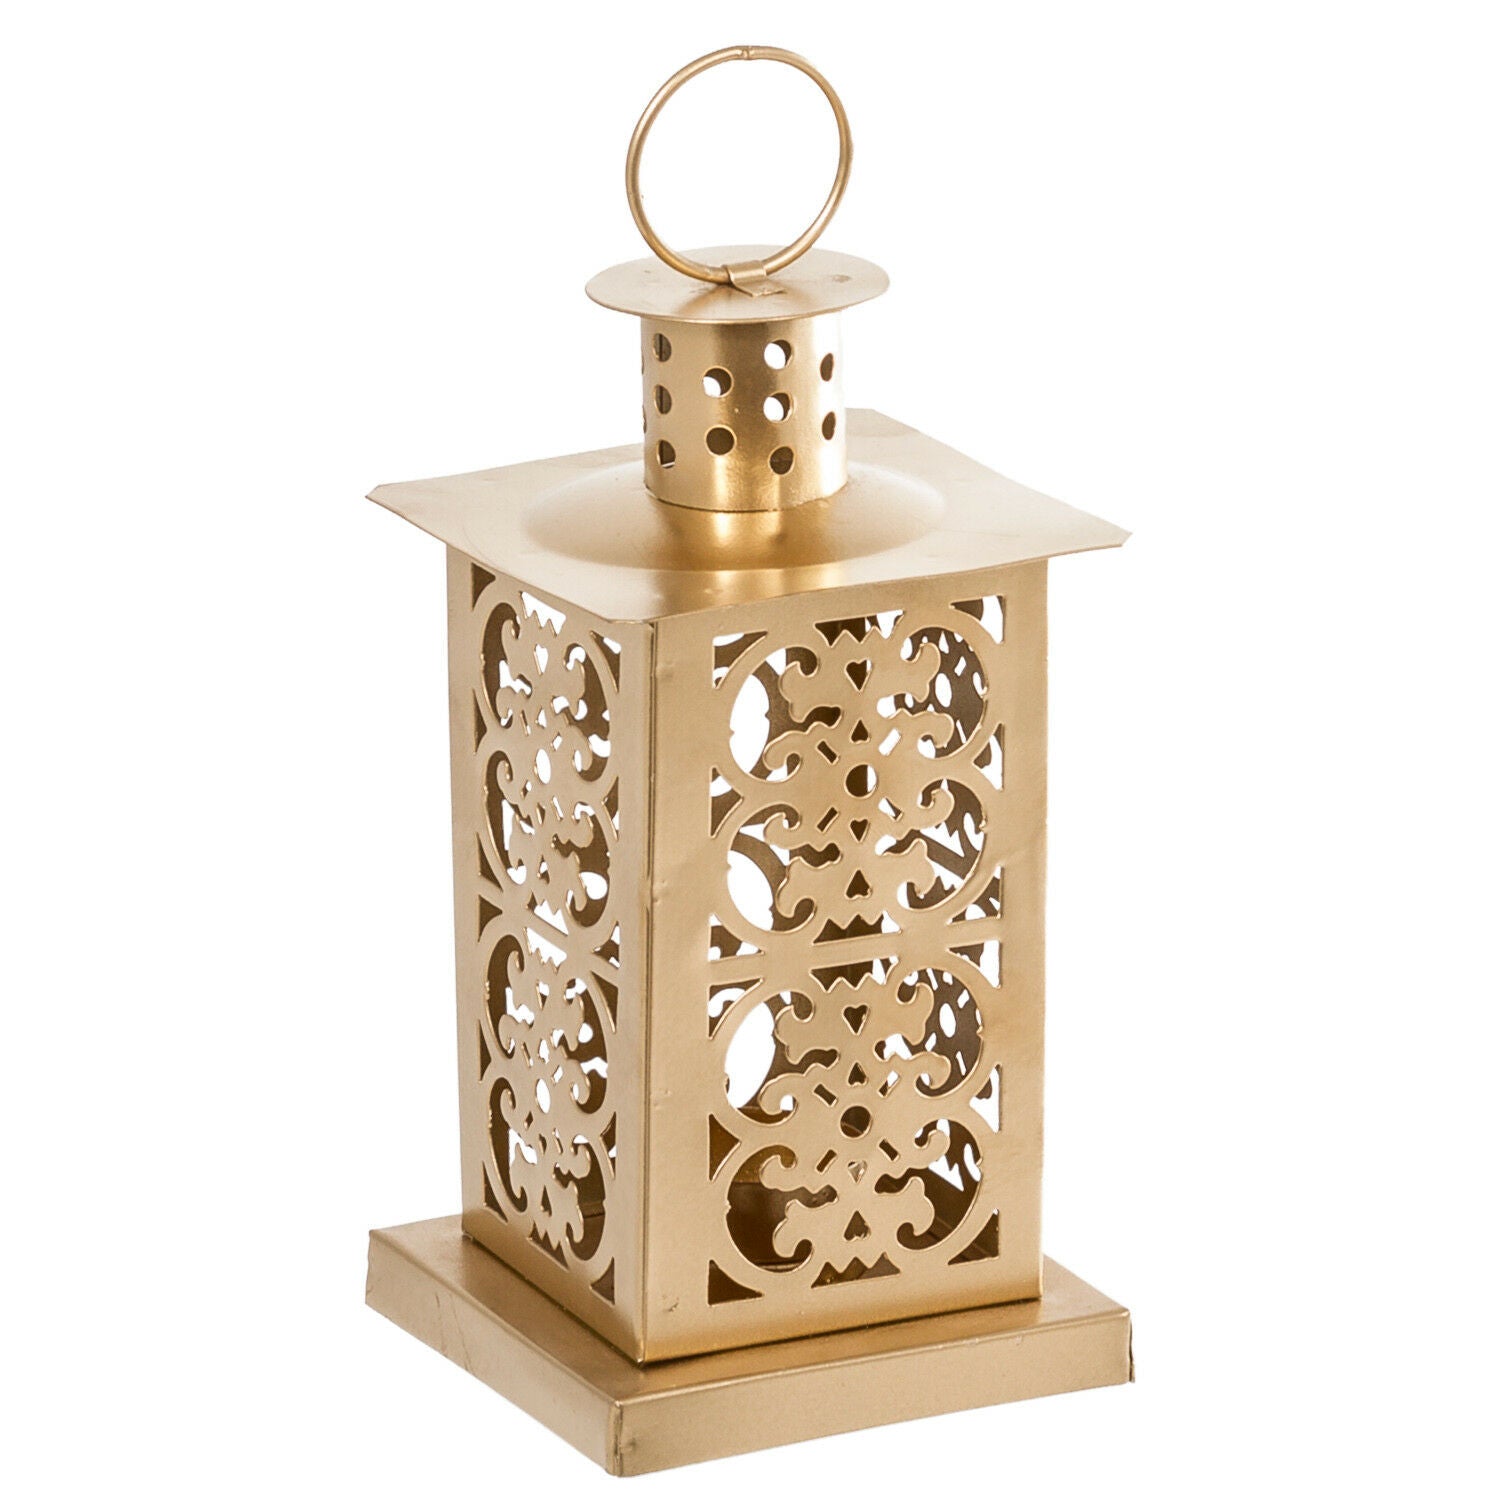 Metal Gold Moroccan Lantern Candle Holder - Tea Light Candle Holder